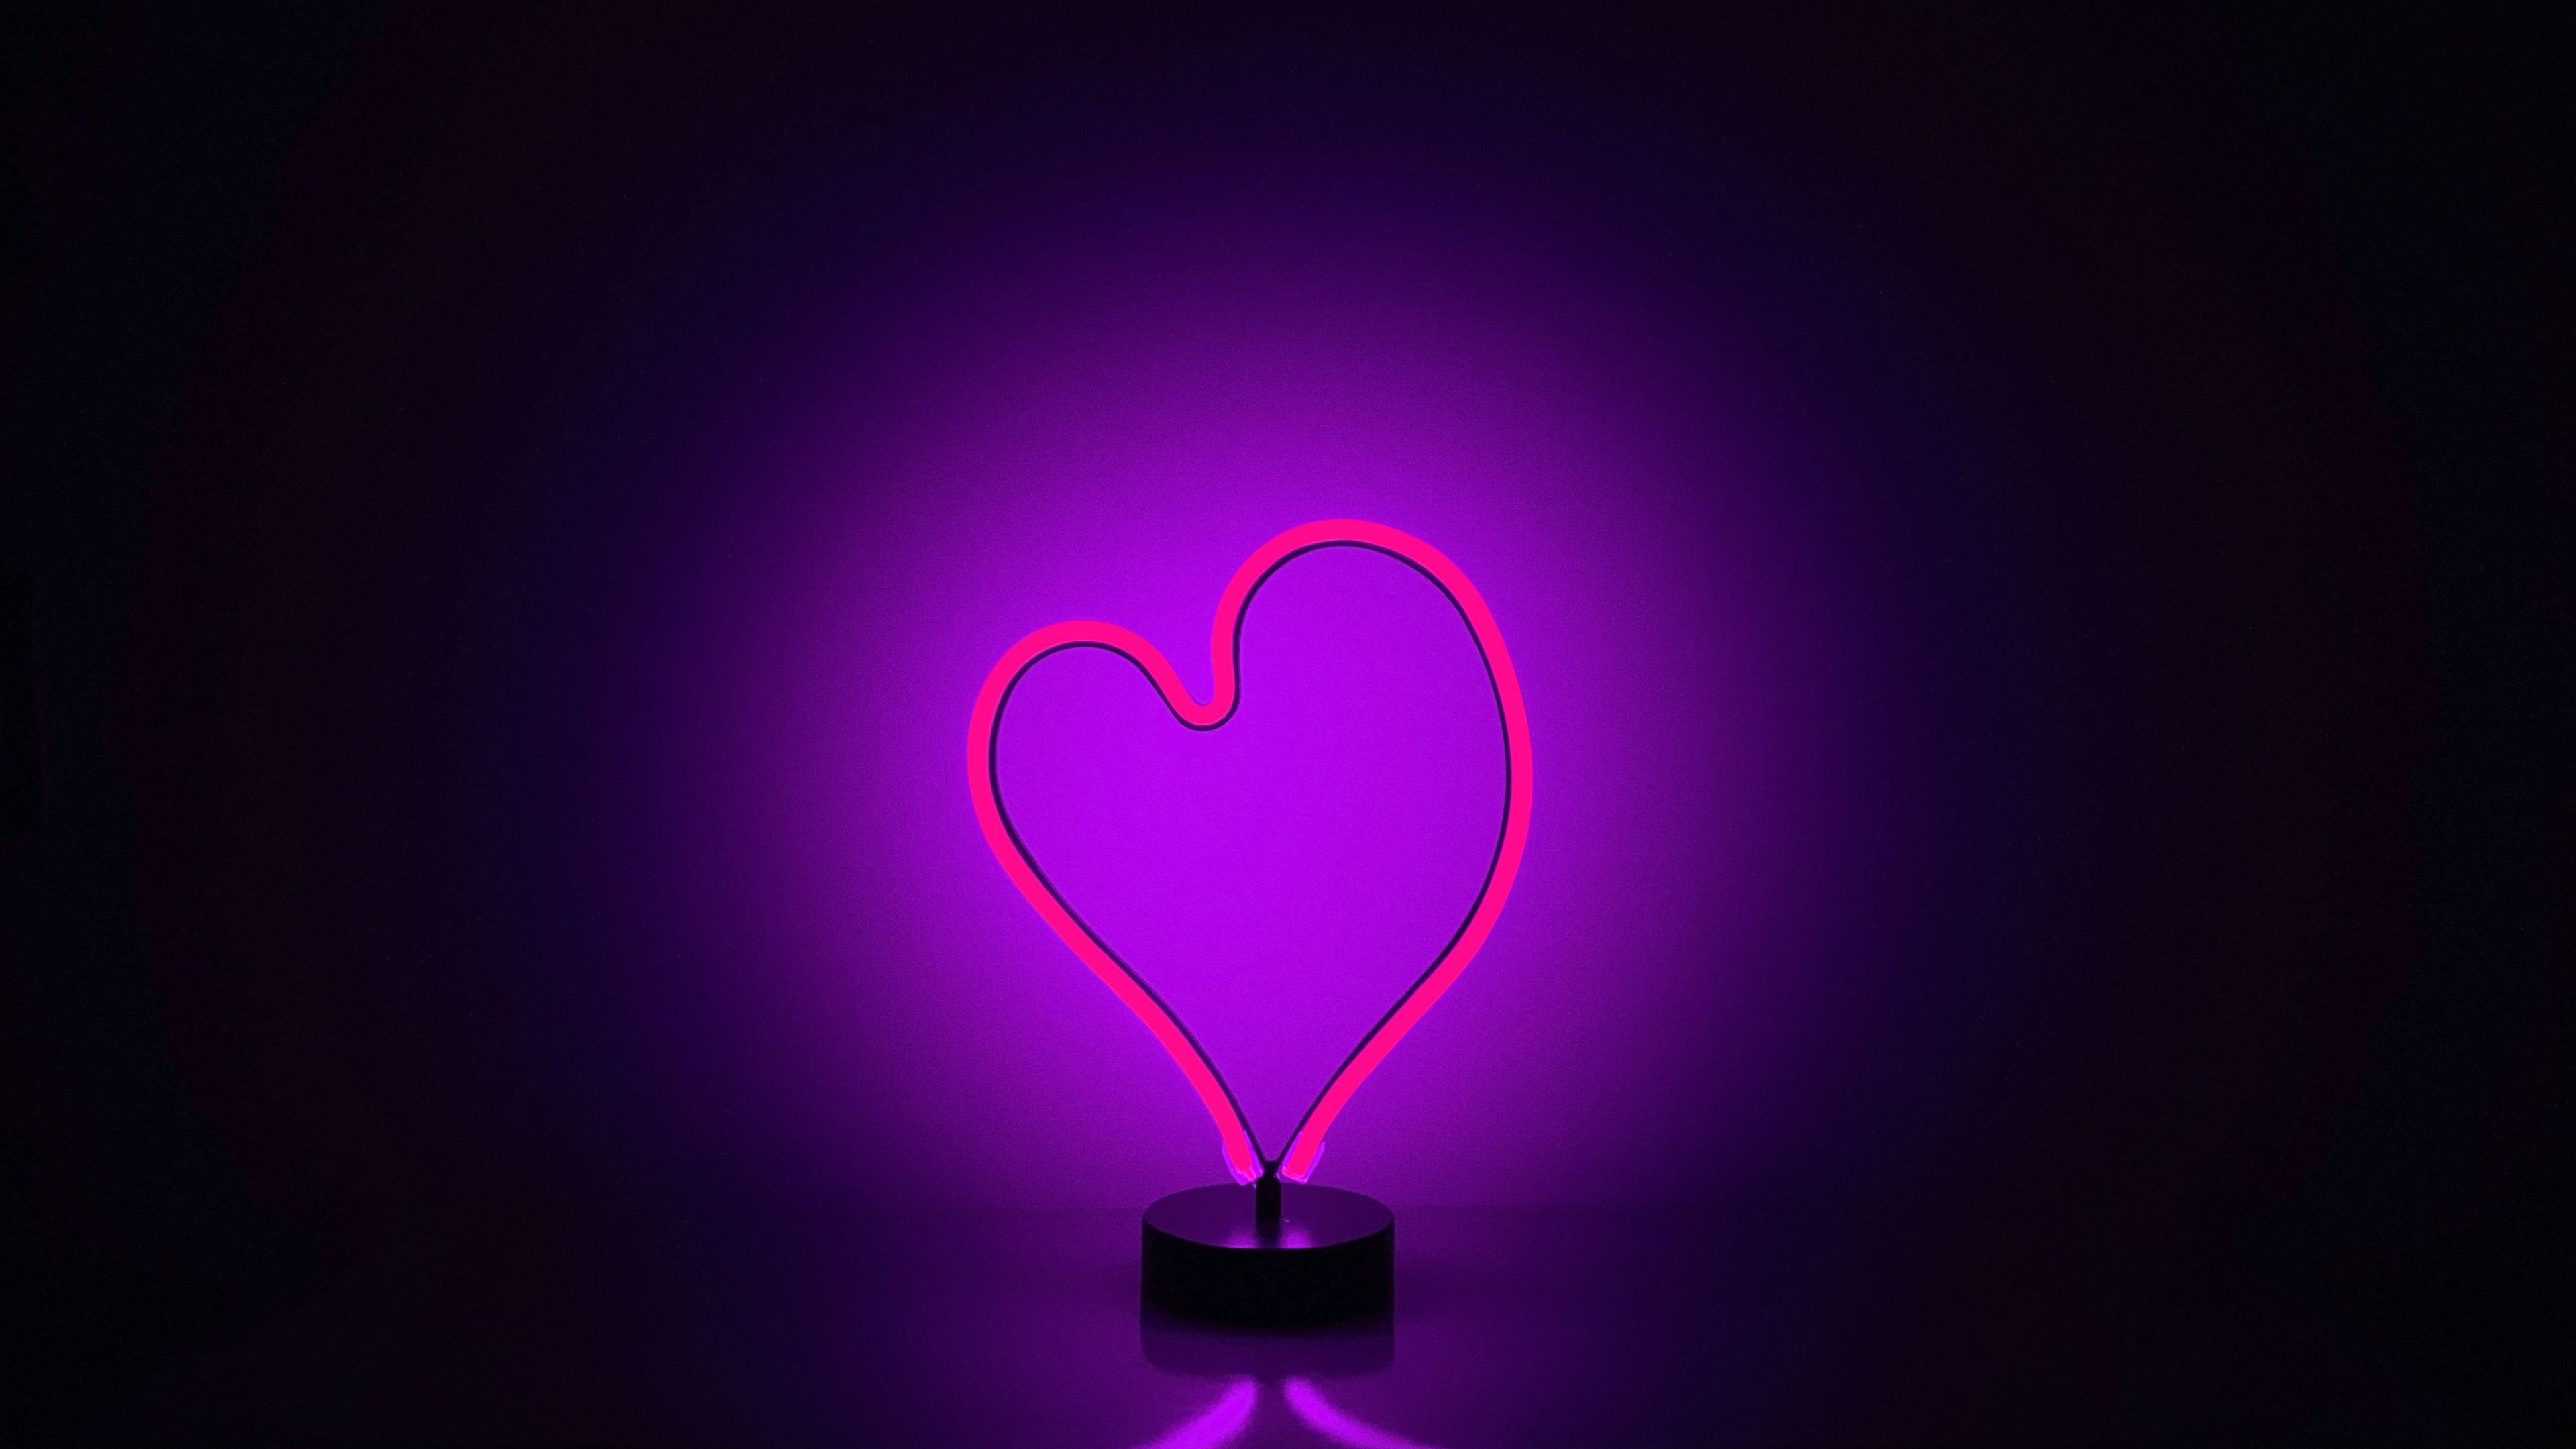 Download 3840x2160 wallpaper love, heart, neon, purple light, minimal, 4k, uhd 16: widescreen, 3840x2160 HD image, background, 4519